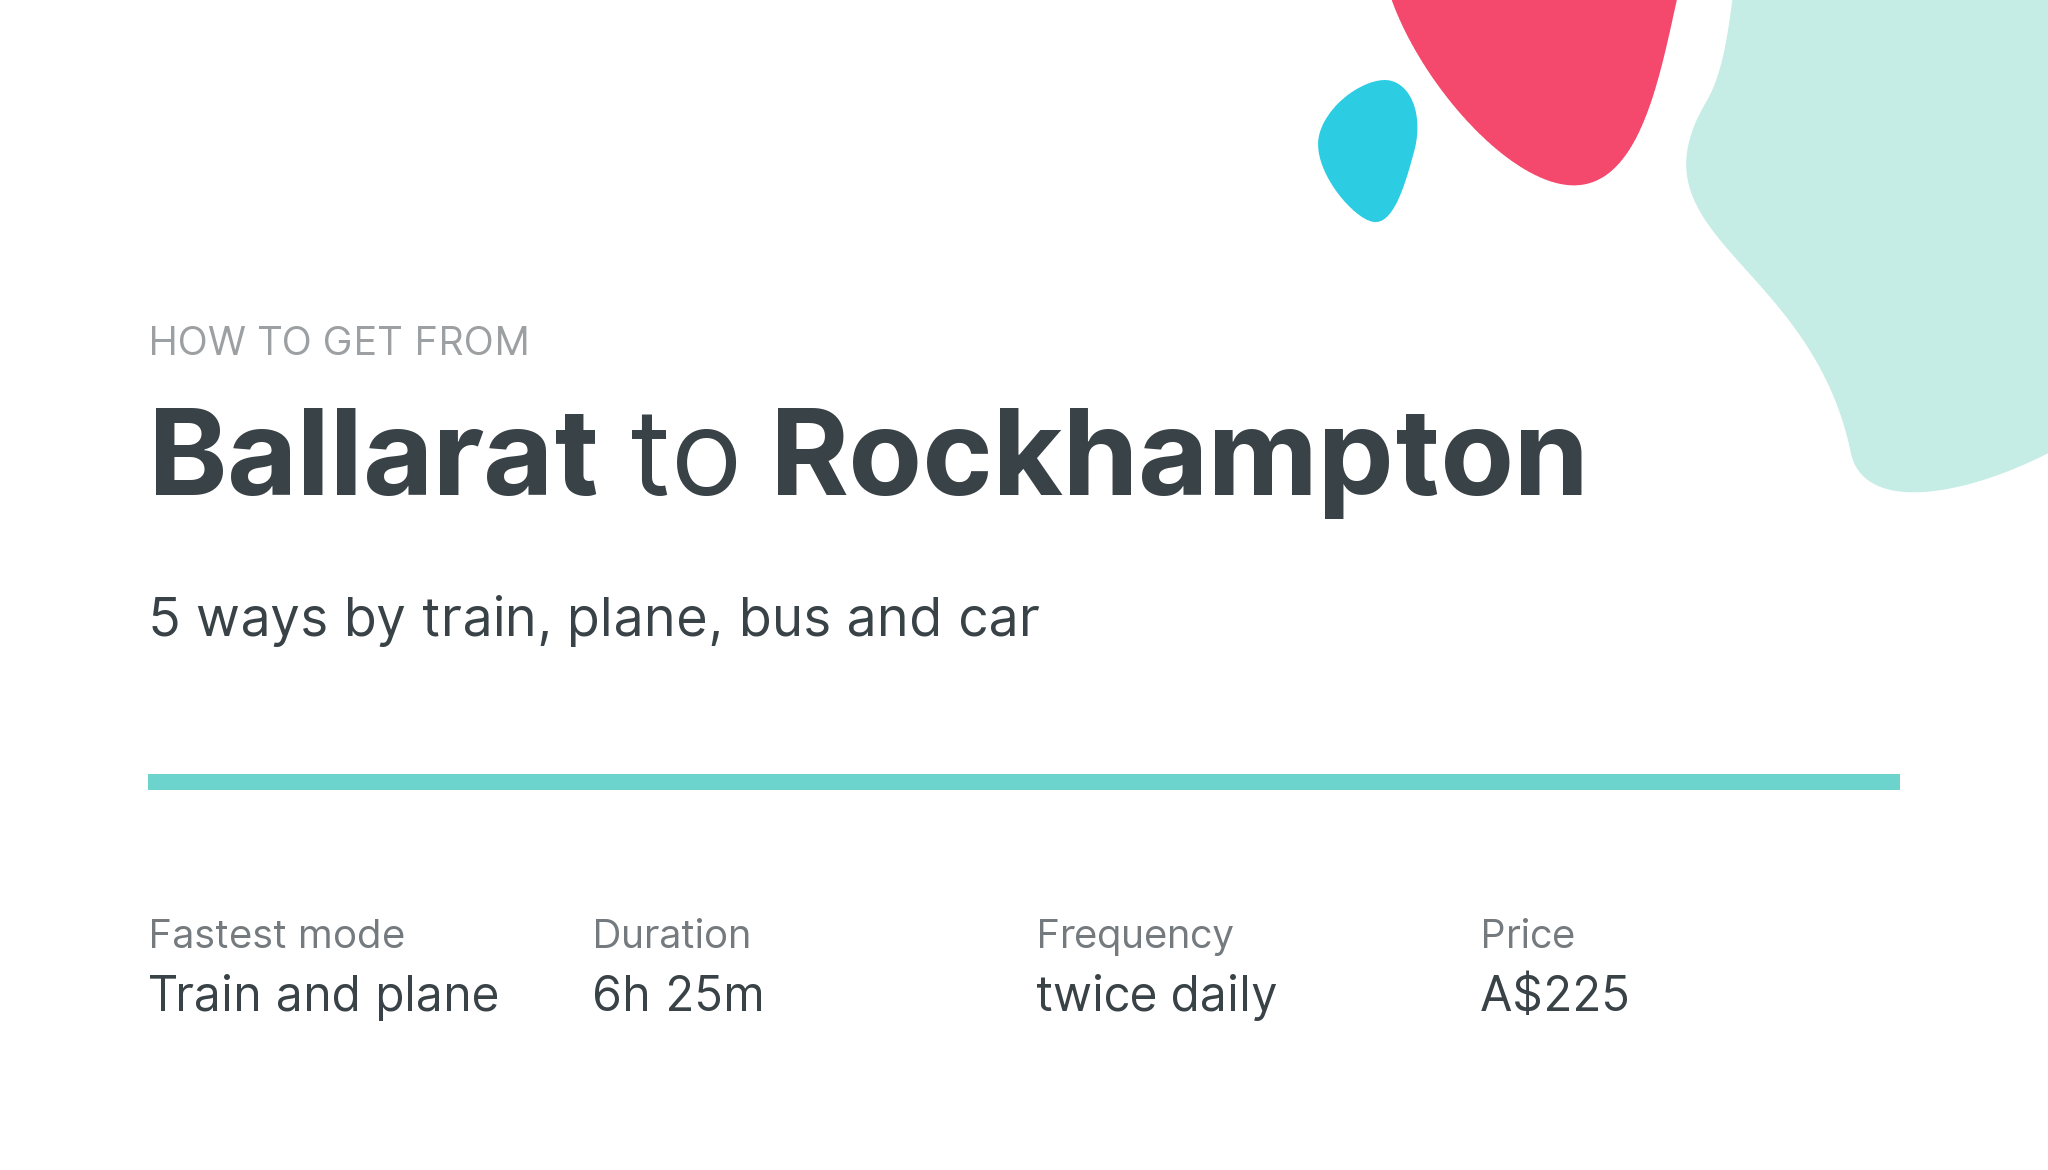 How do I get from Ballarat to Rockhampton